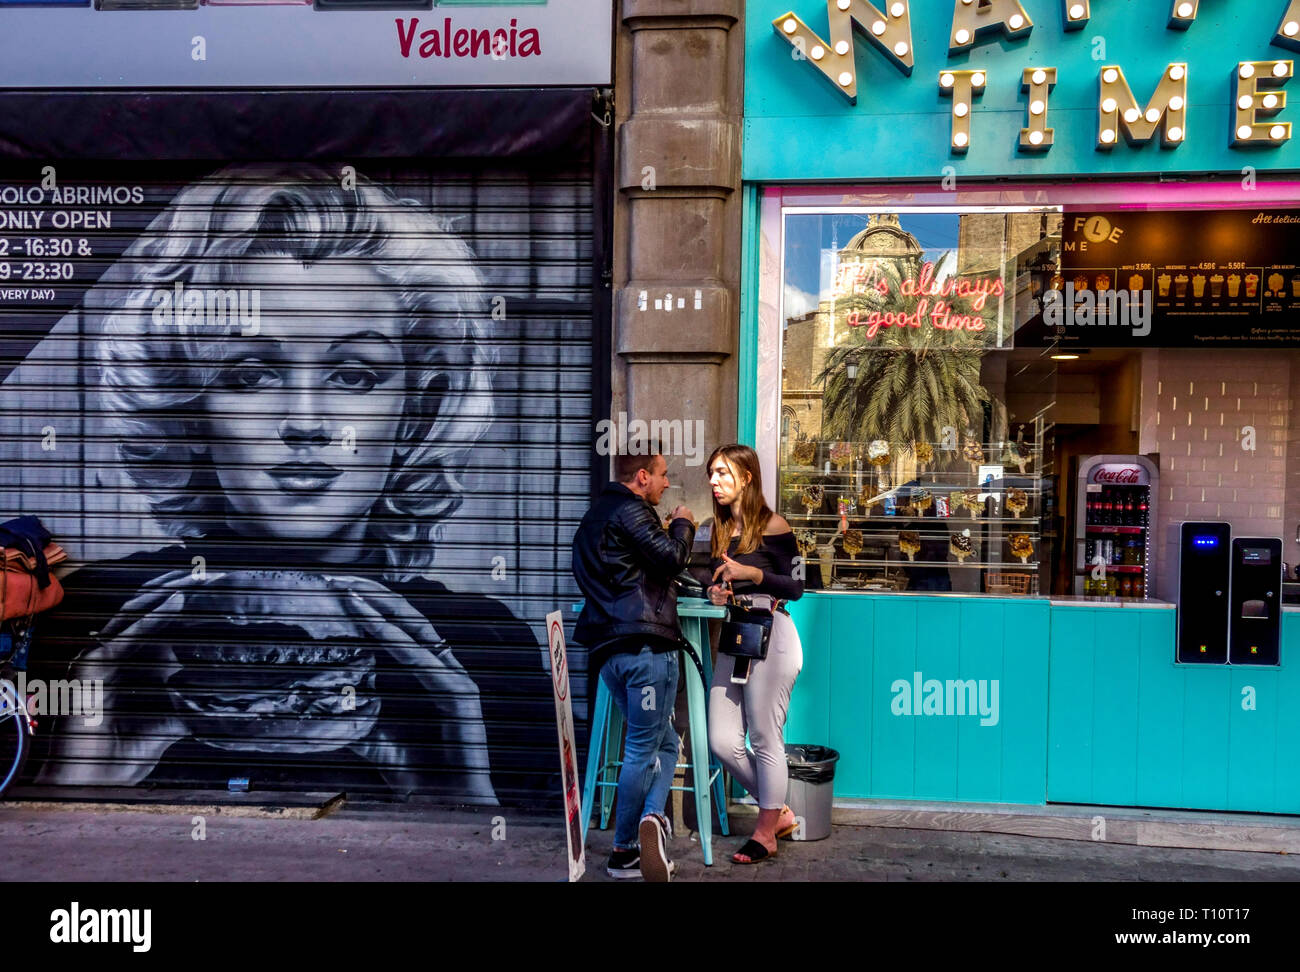 Valencia Street Art Altstadt mit Marilyn Monroe essen Burger Valencia Straßen Graffiti Spanien Lebensszene junge Paarstadt Stockfoto